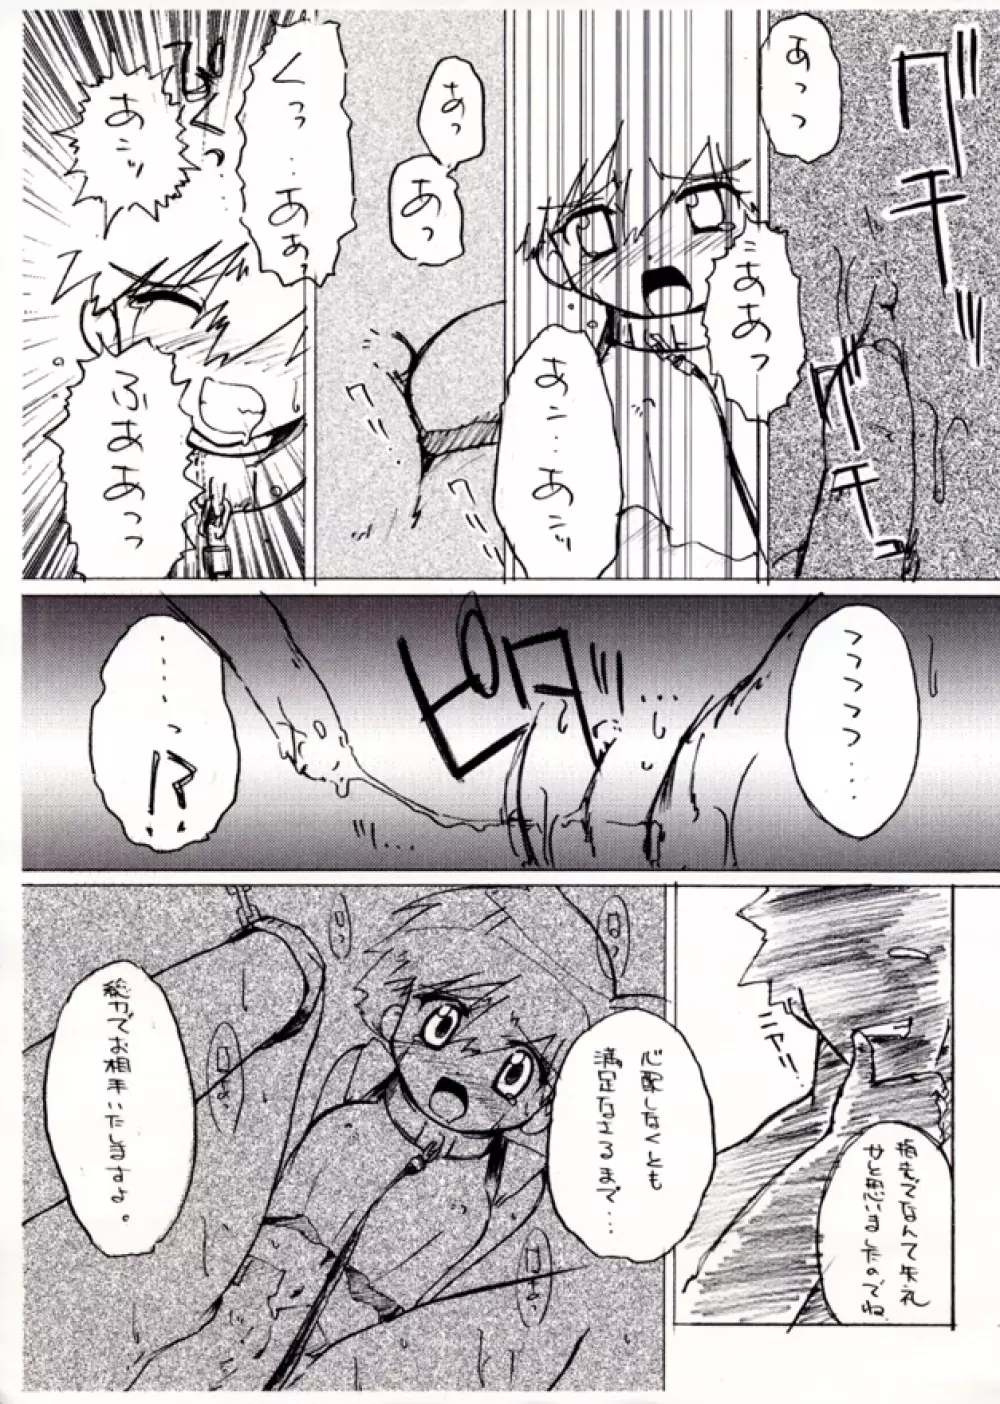 KASUMIX XPLOSION Kasumi Comic part5 - page17